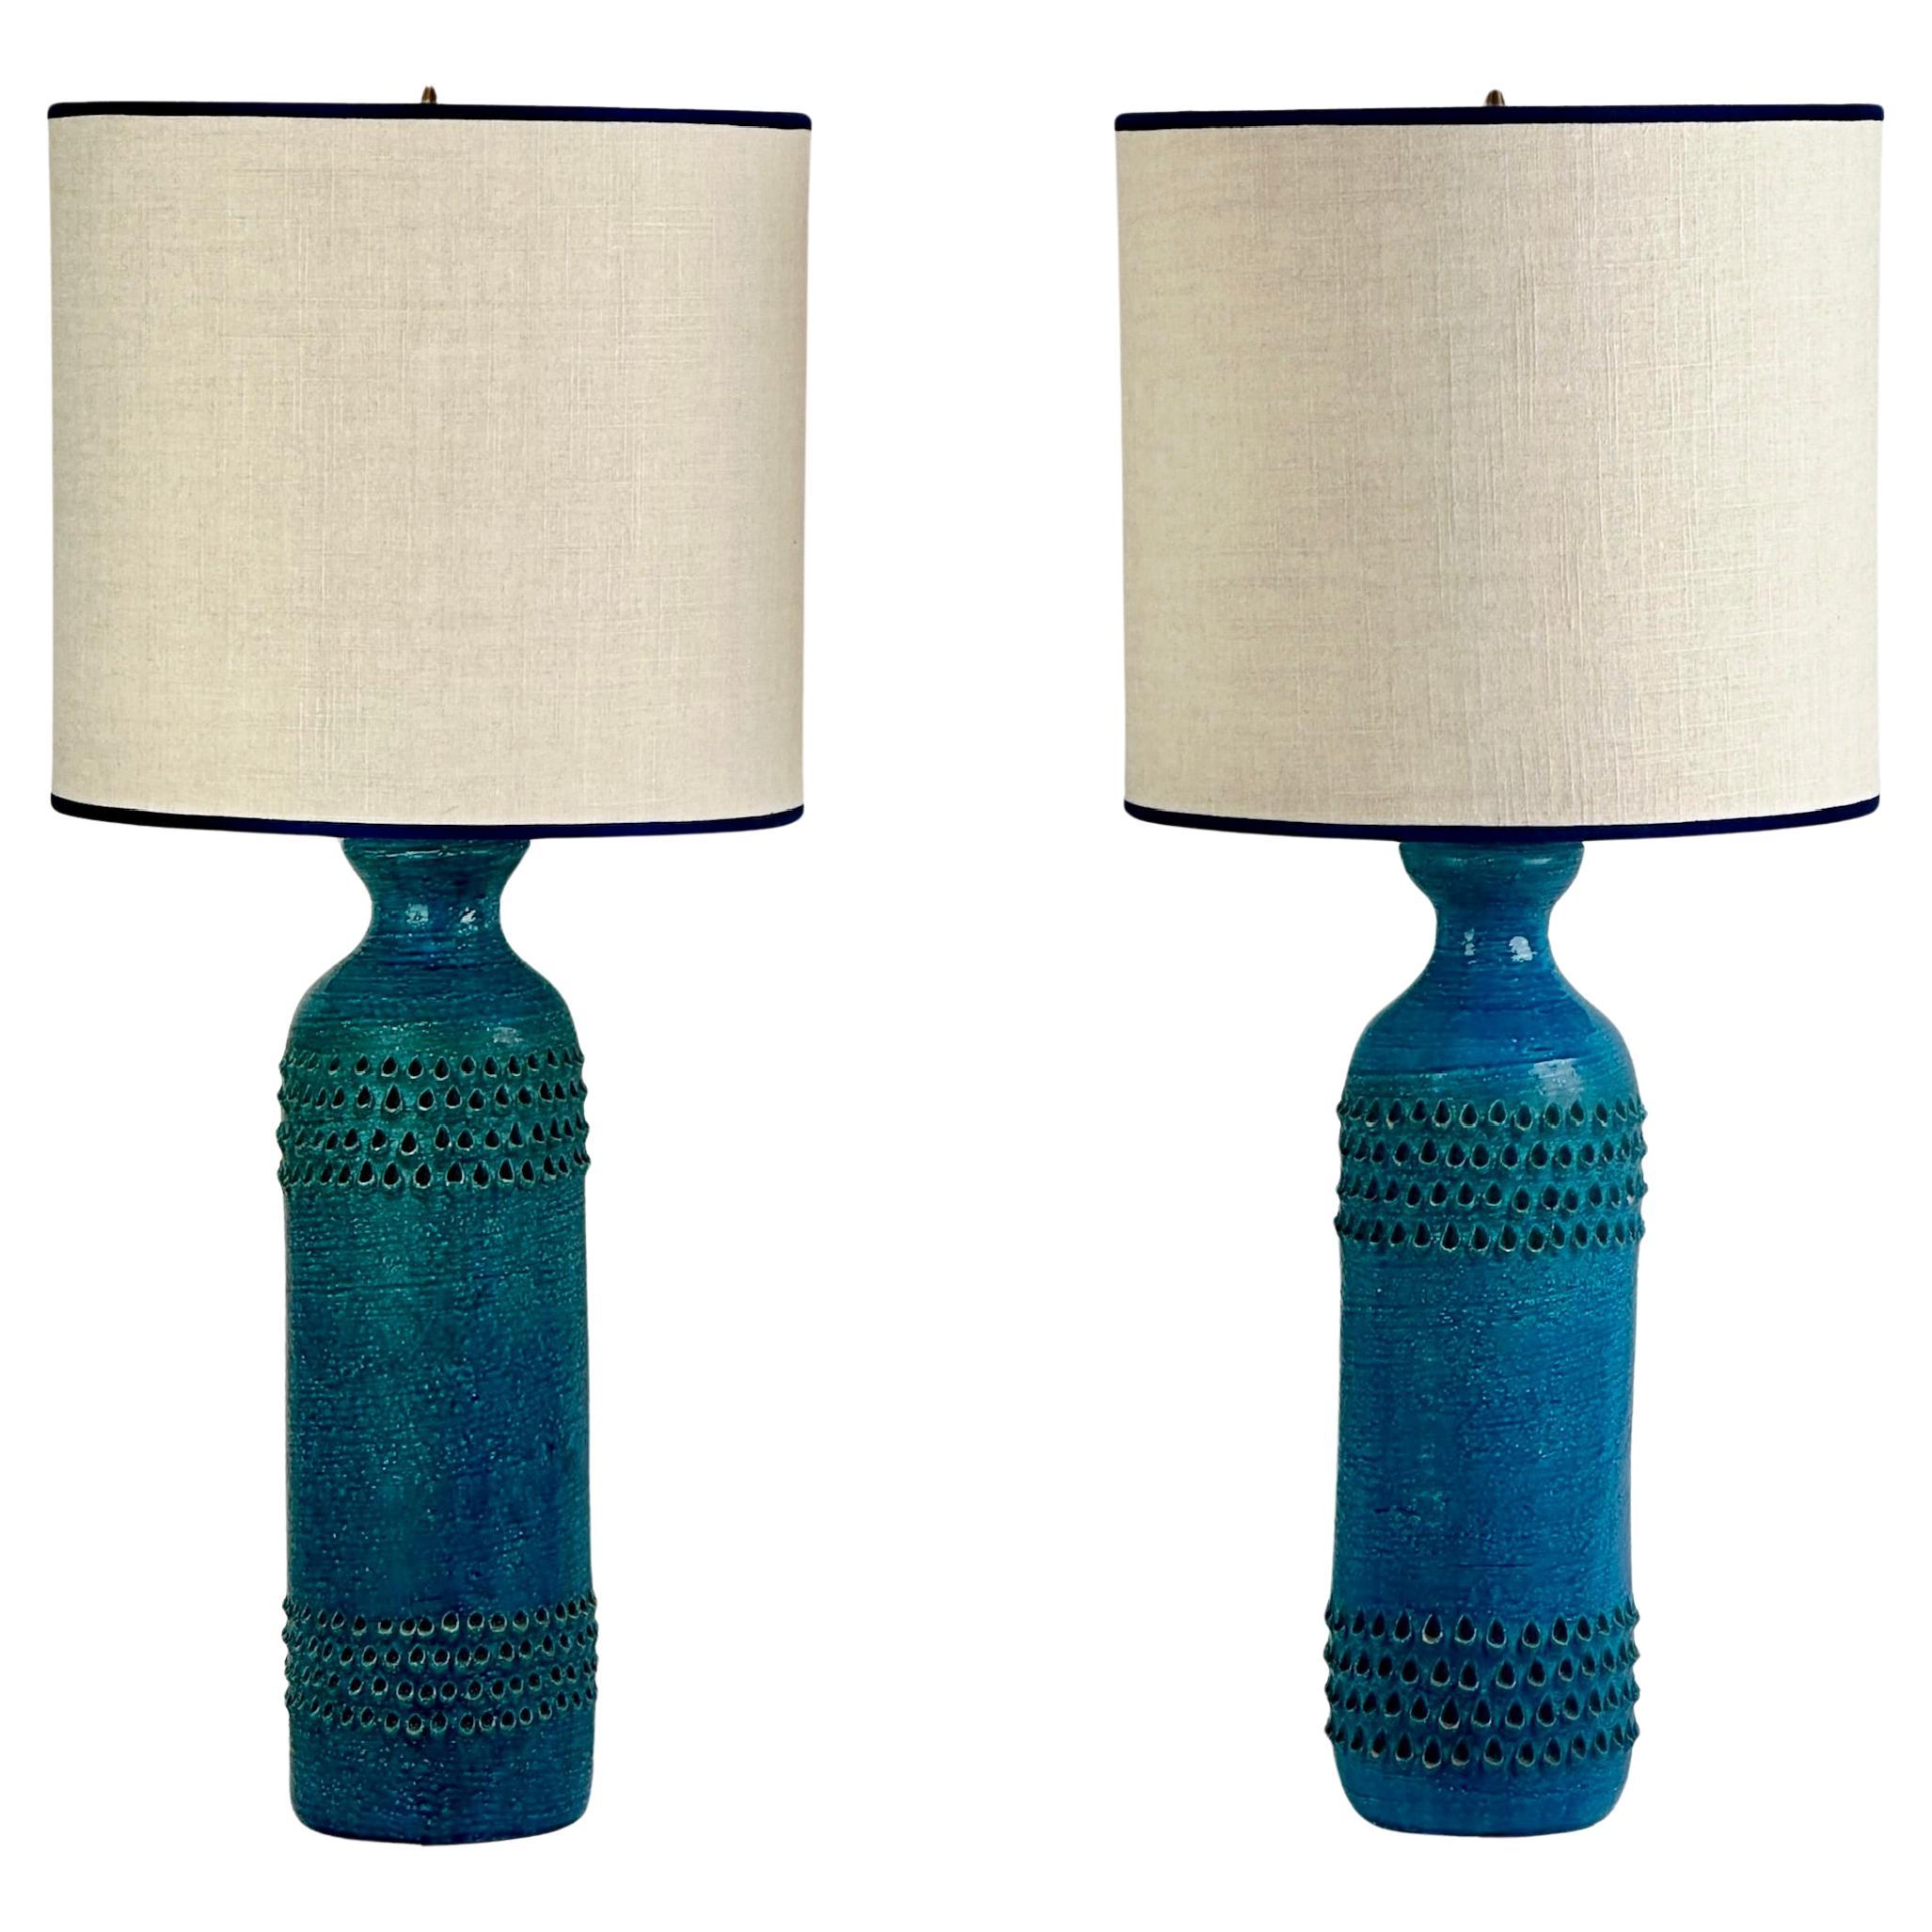 Pair of 1950's Rimini Blue Ceramic Table Lamps by Aldo Londi for Bitossi